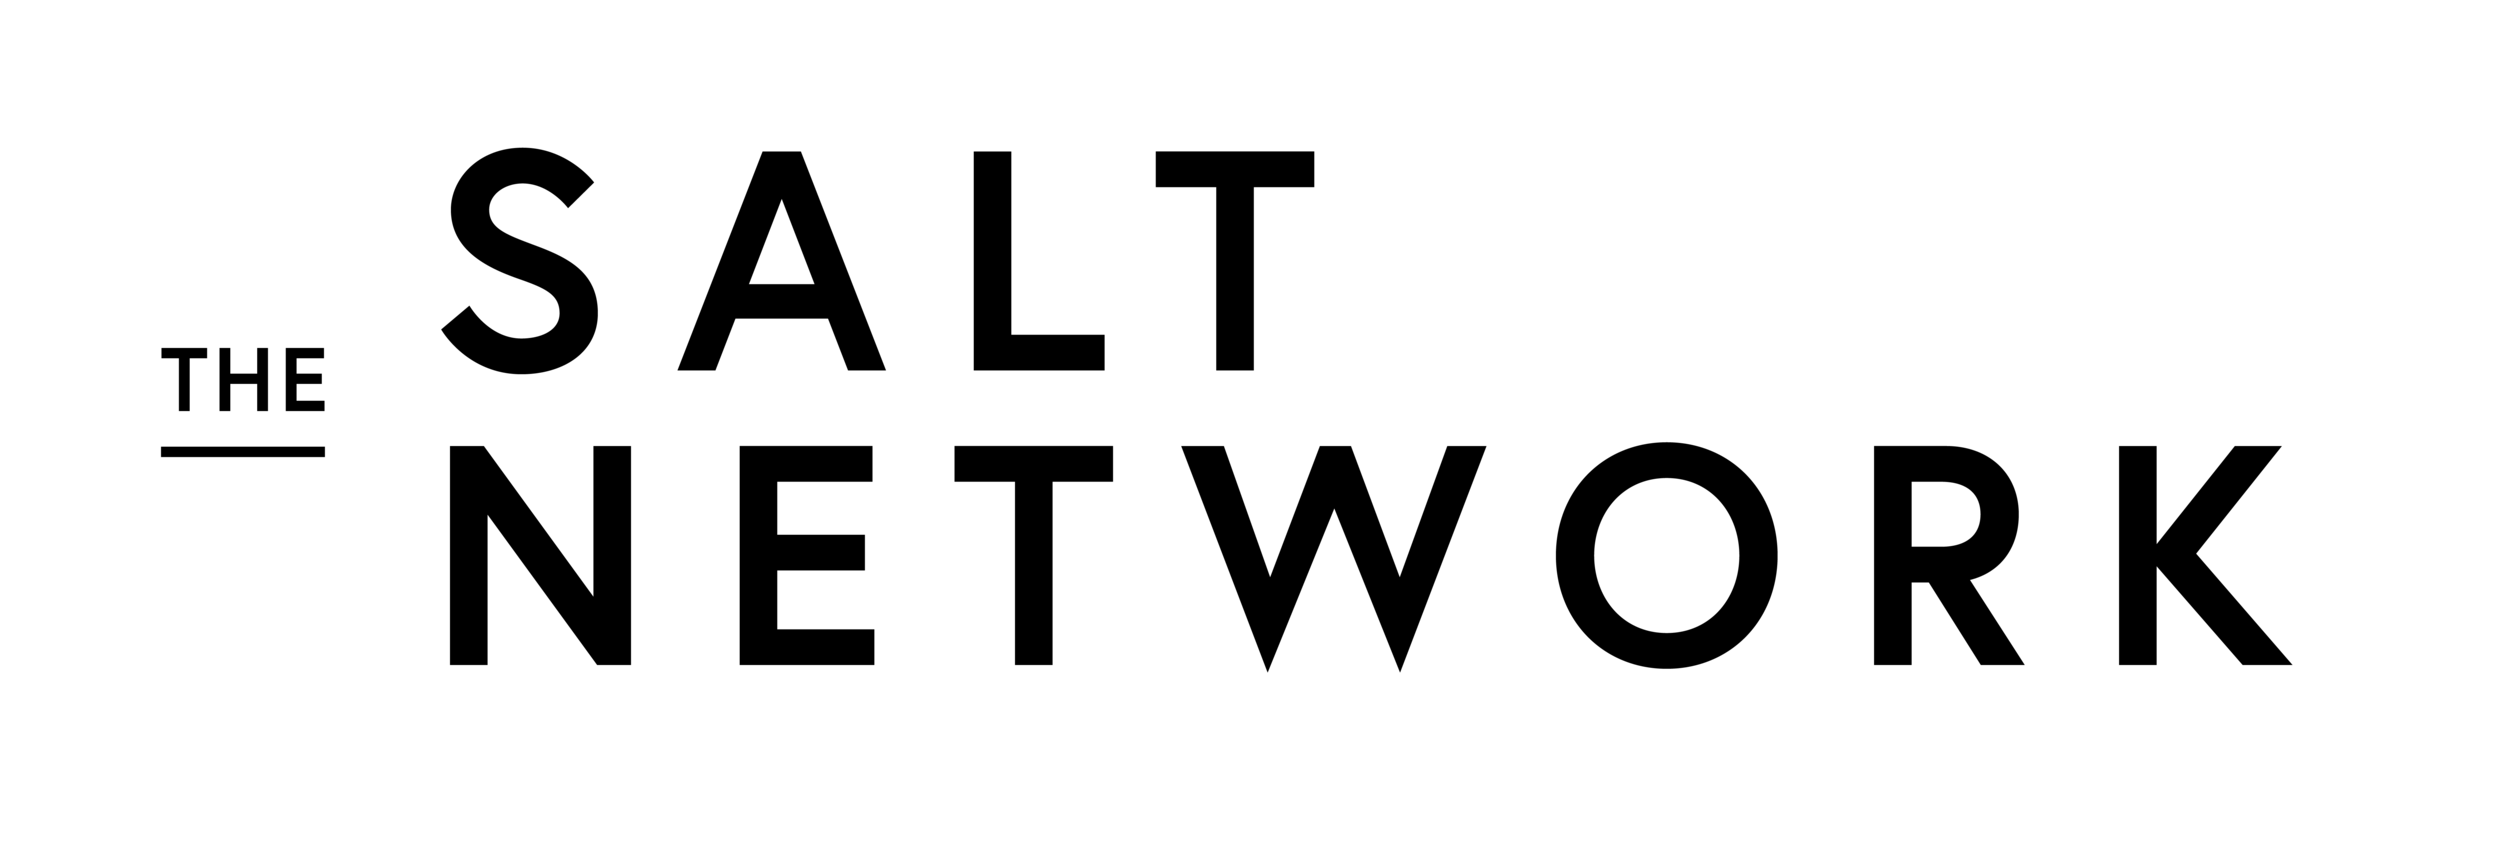 The Salt Network Logo.png